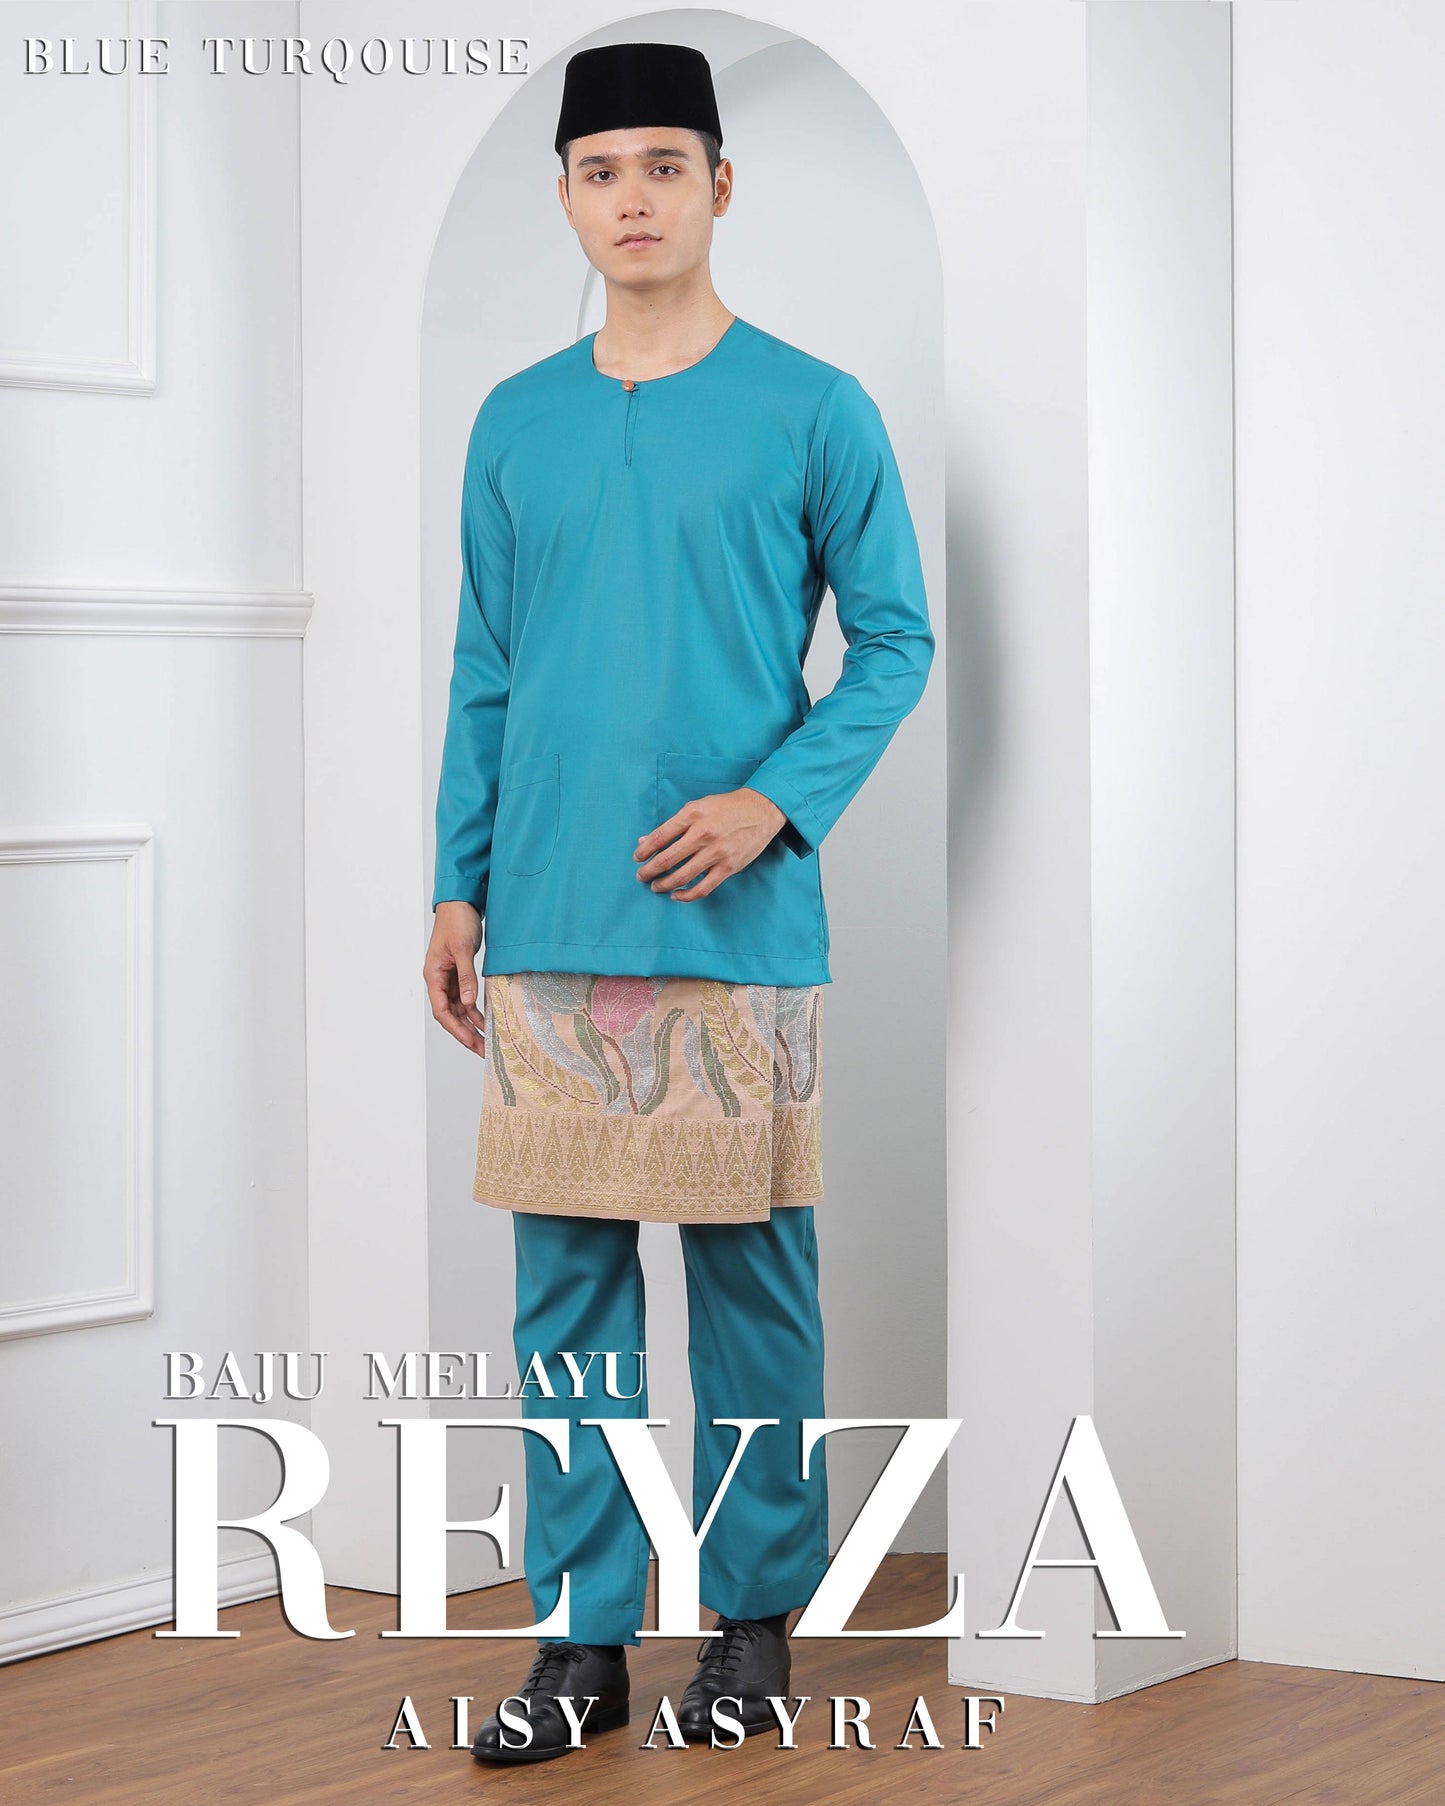 Baju Melayu Reyza - Blue Turqouise